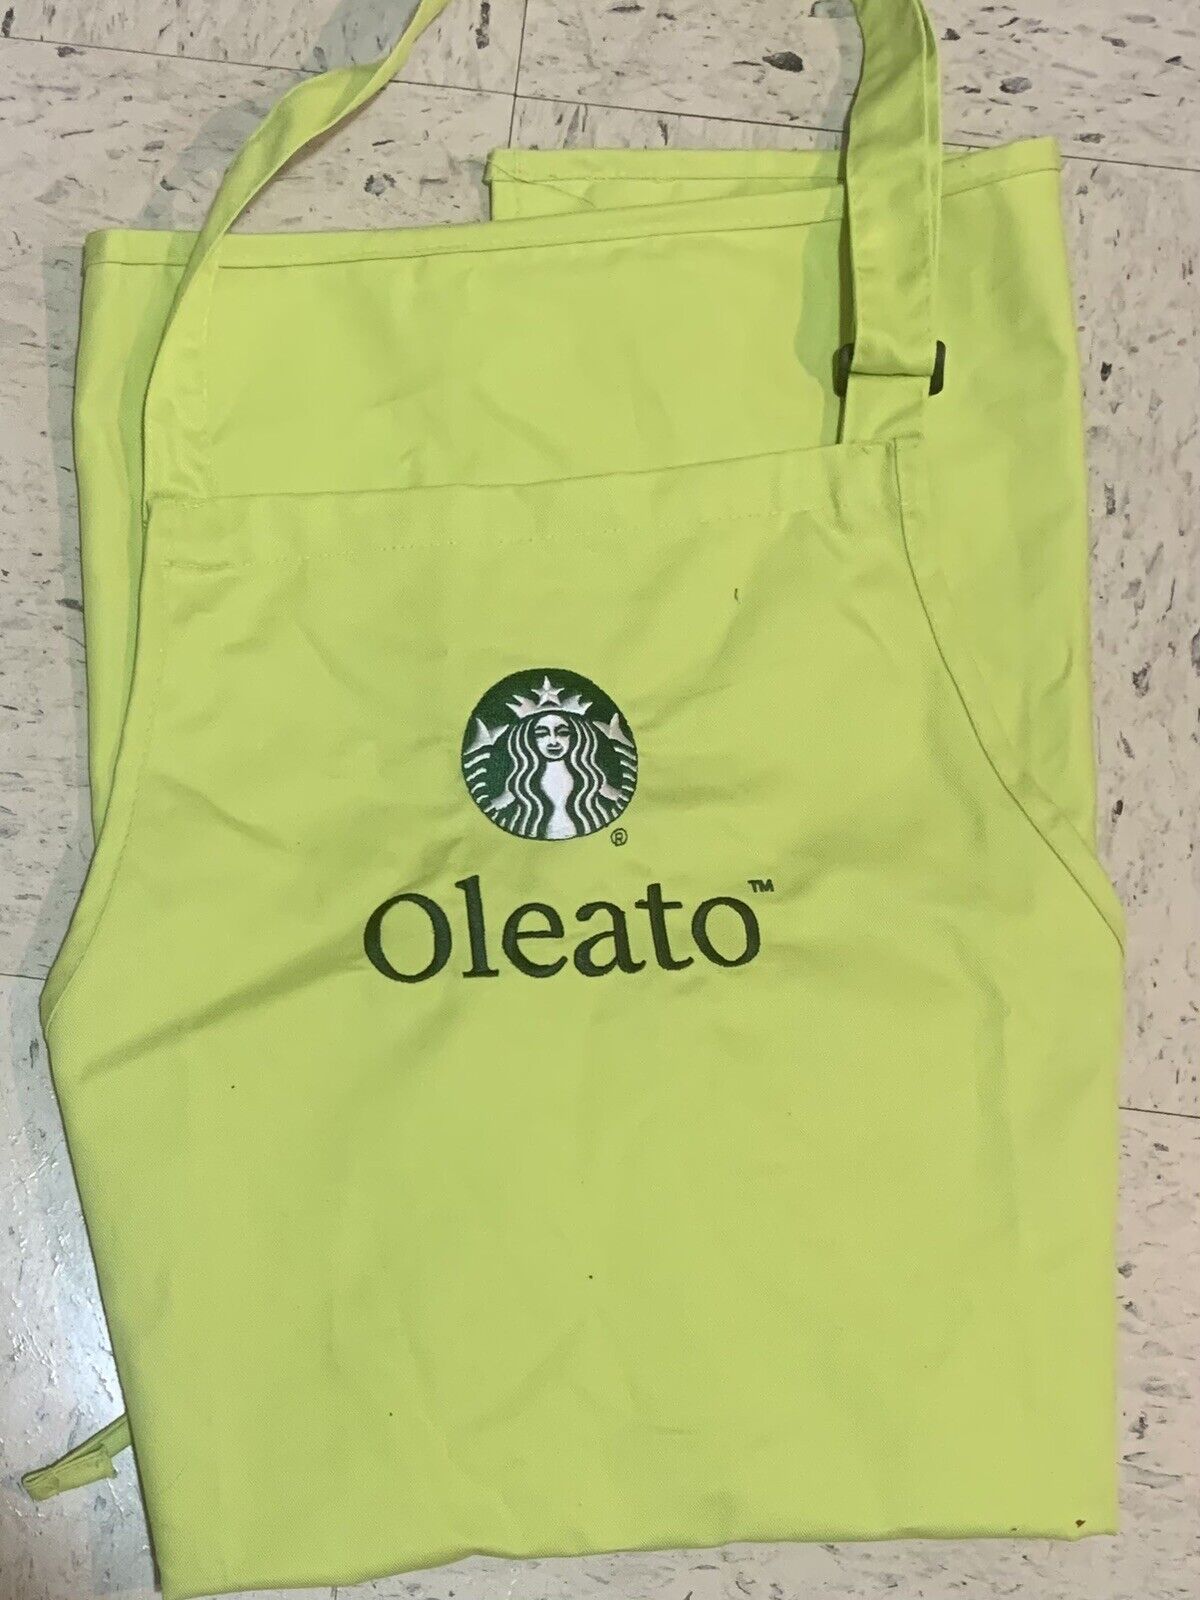 Starbucks Apron Oleato | Limited Edition Authentic Starbucks Oleato Apron